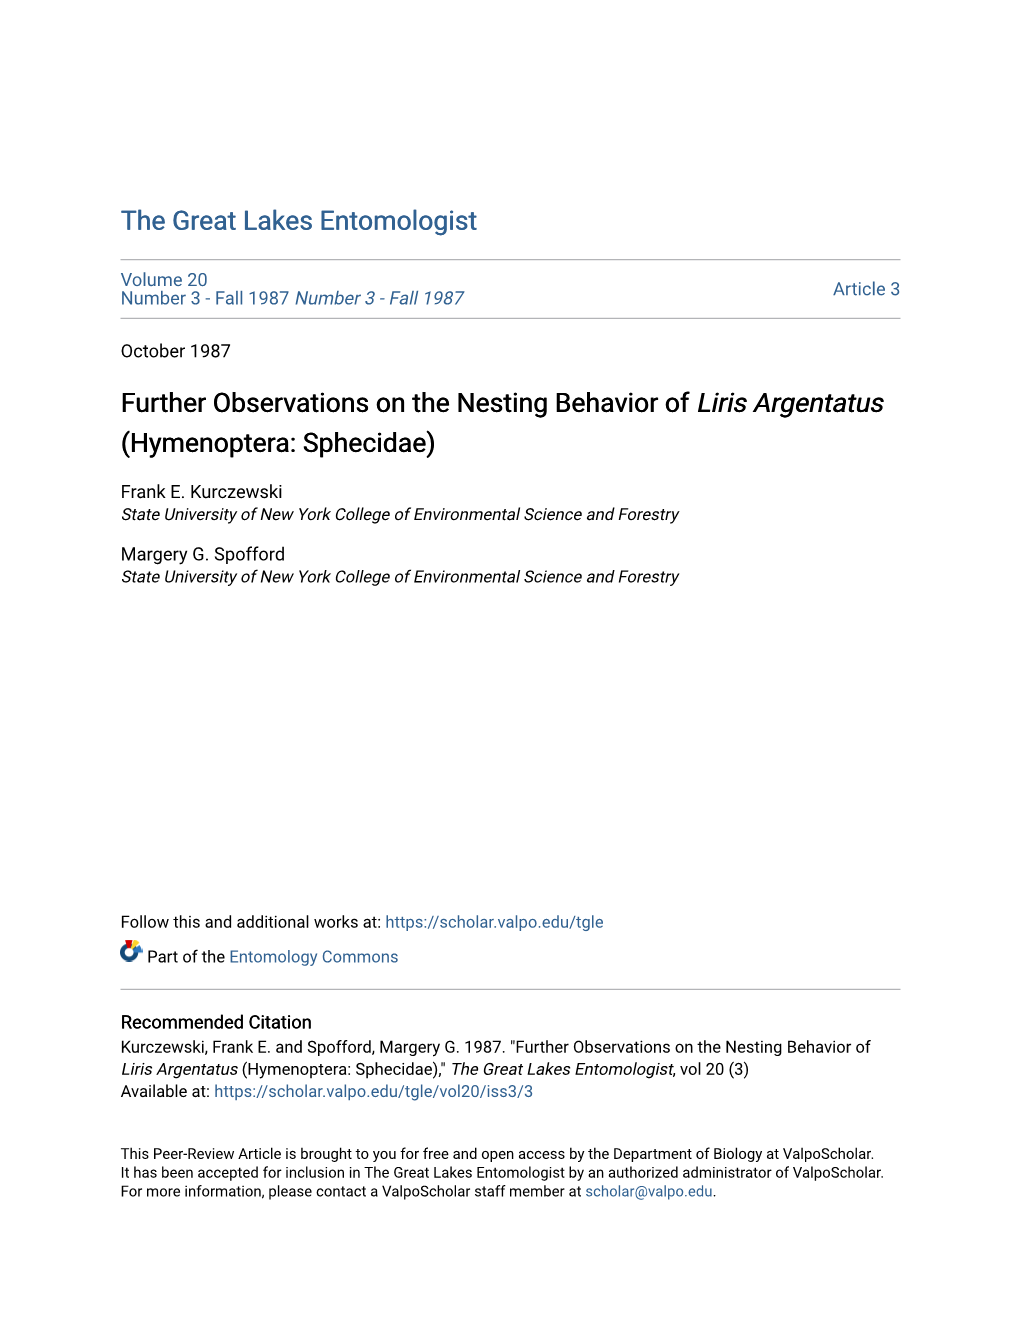 Further Observations on the Nesting Behavior of Liris Argentatus (Hymenoptera: Sphecidae)